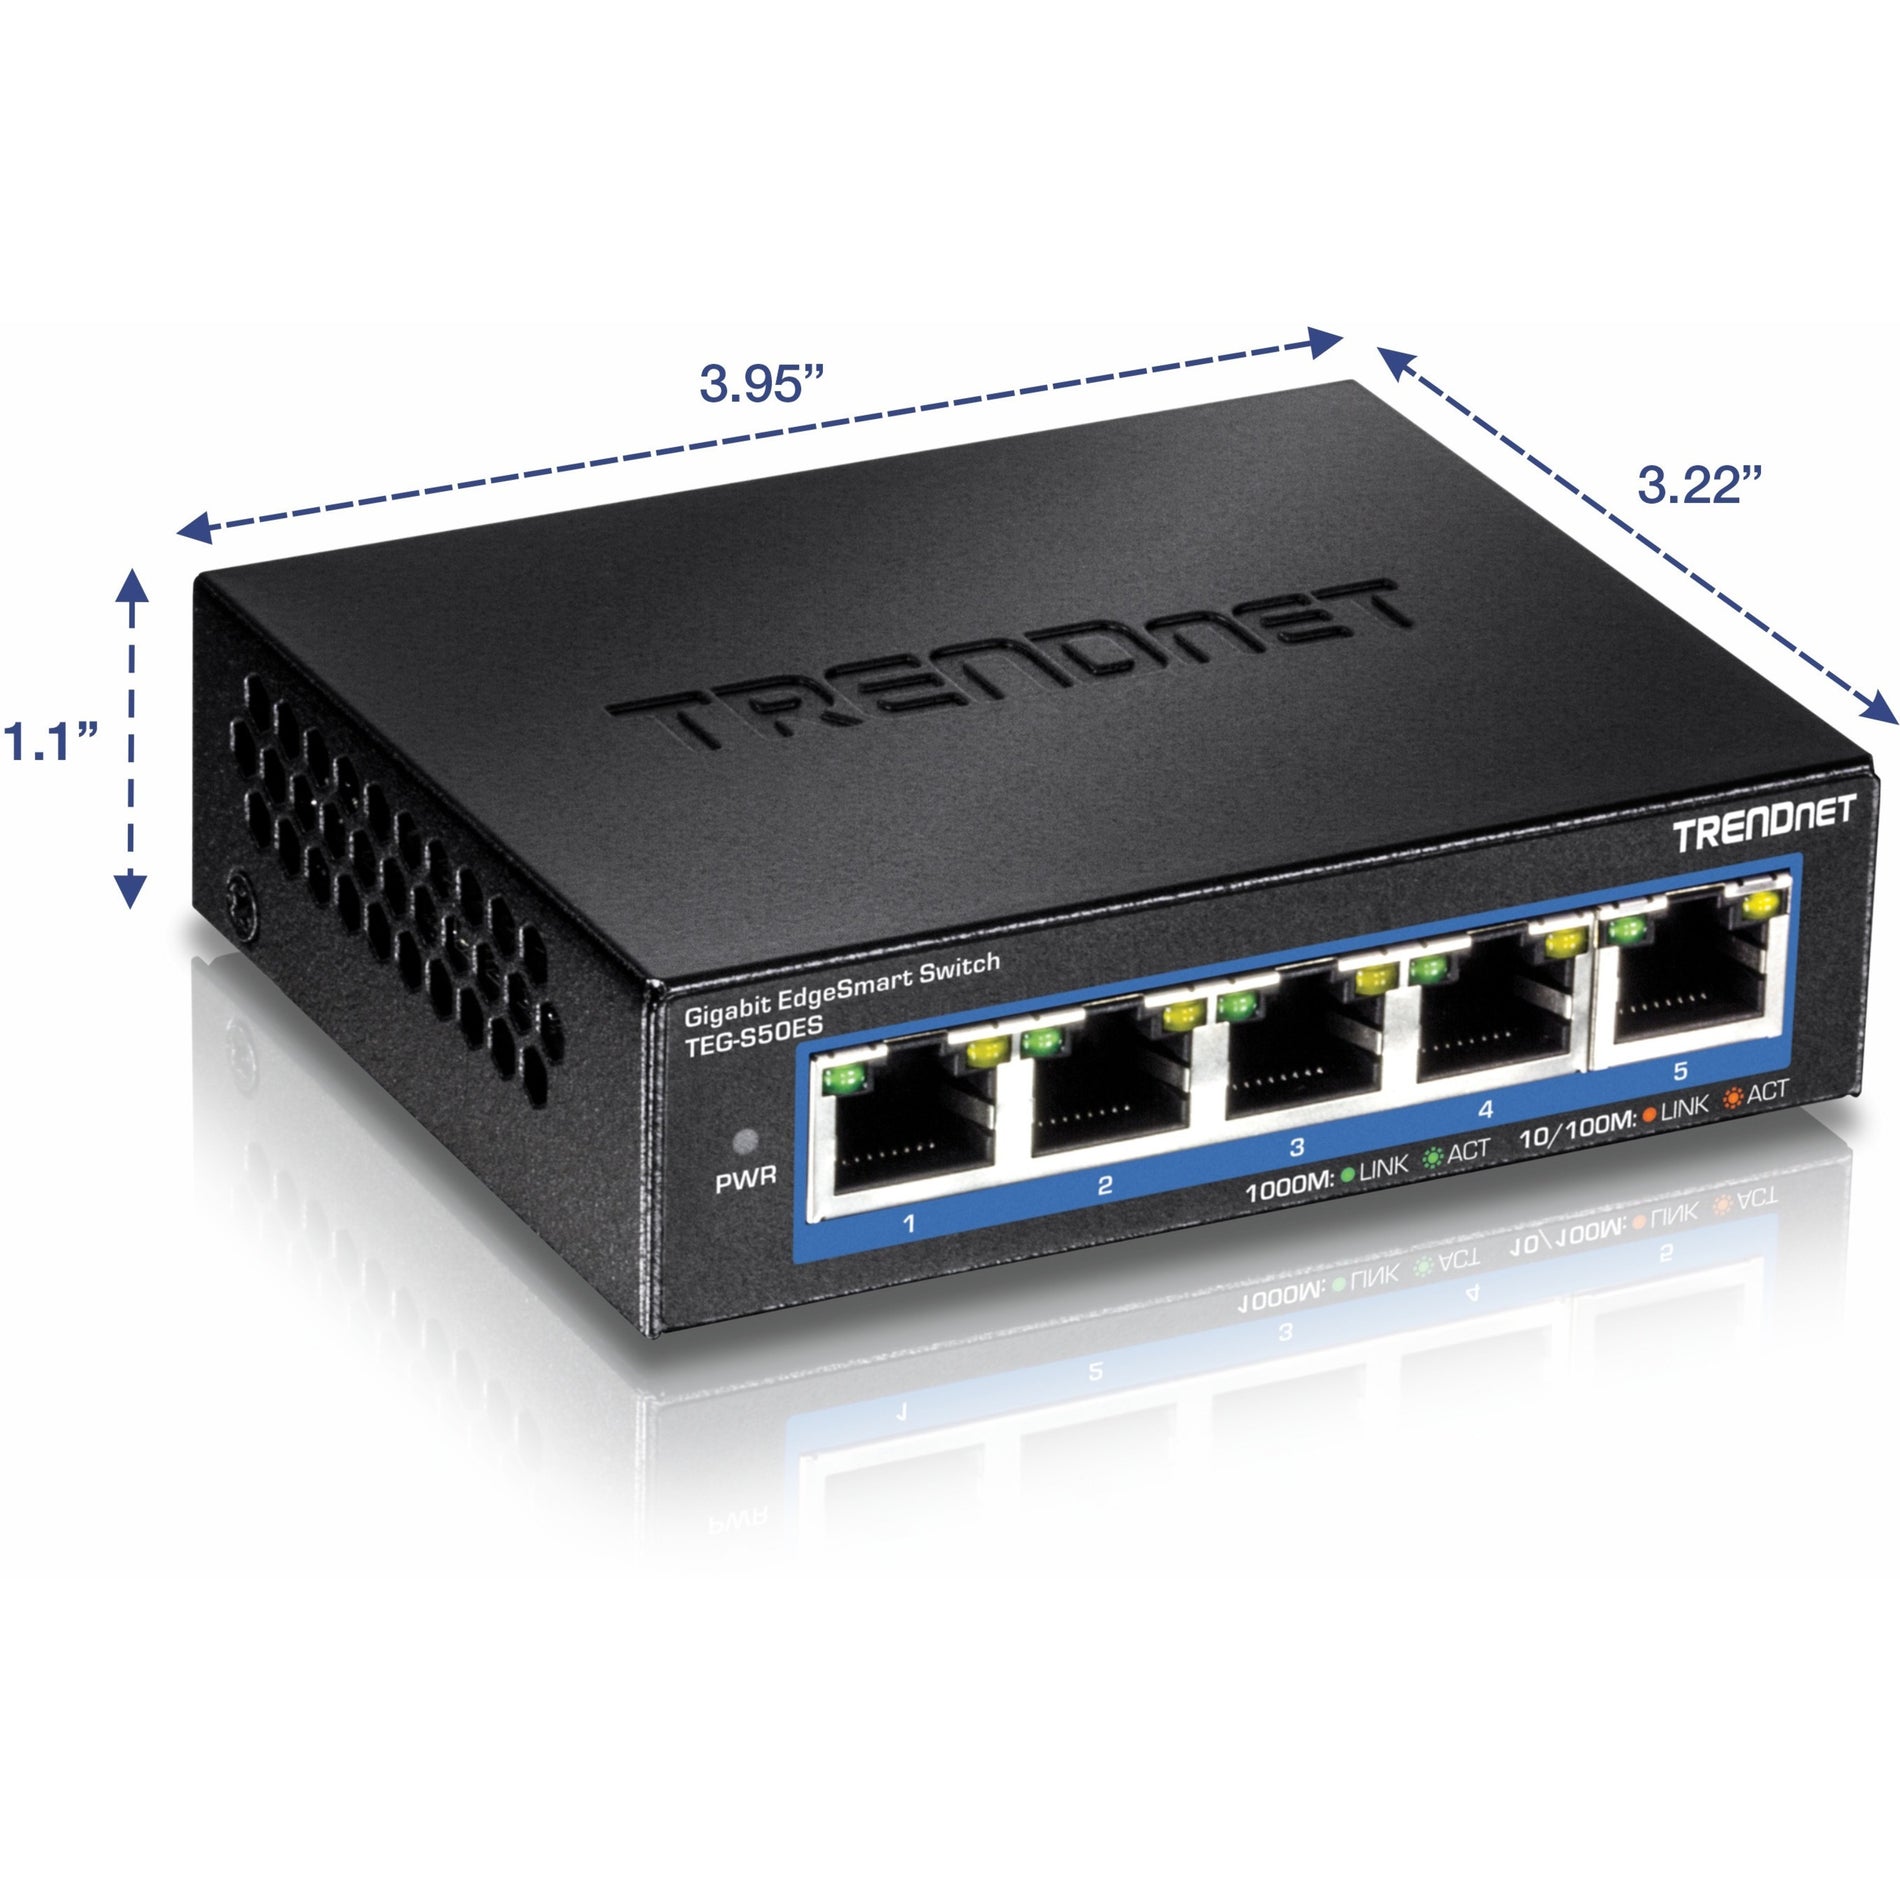 TRENDnet TEG-S50ES 5-Port Gigabit EdgeSmart Switch, 10Gbps Switch Capacity, Ethernet Network Desktop Switch, Managed Smart Gigabit Switch, Metal, Fanless, Lifetime Protection